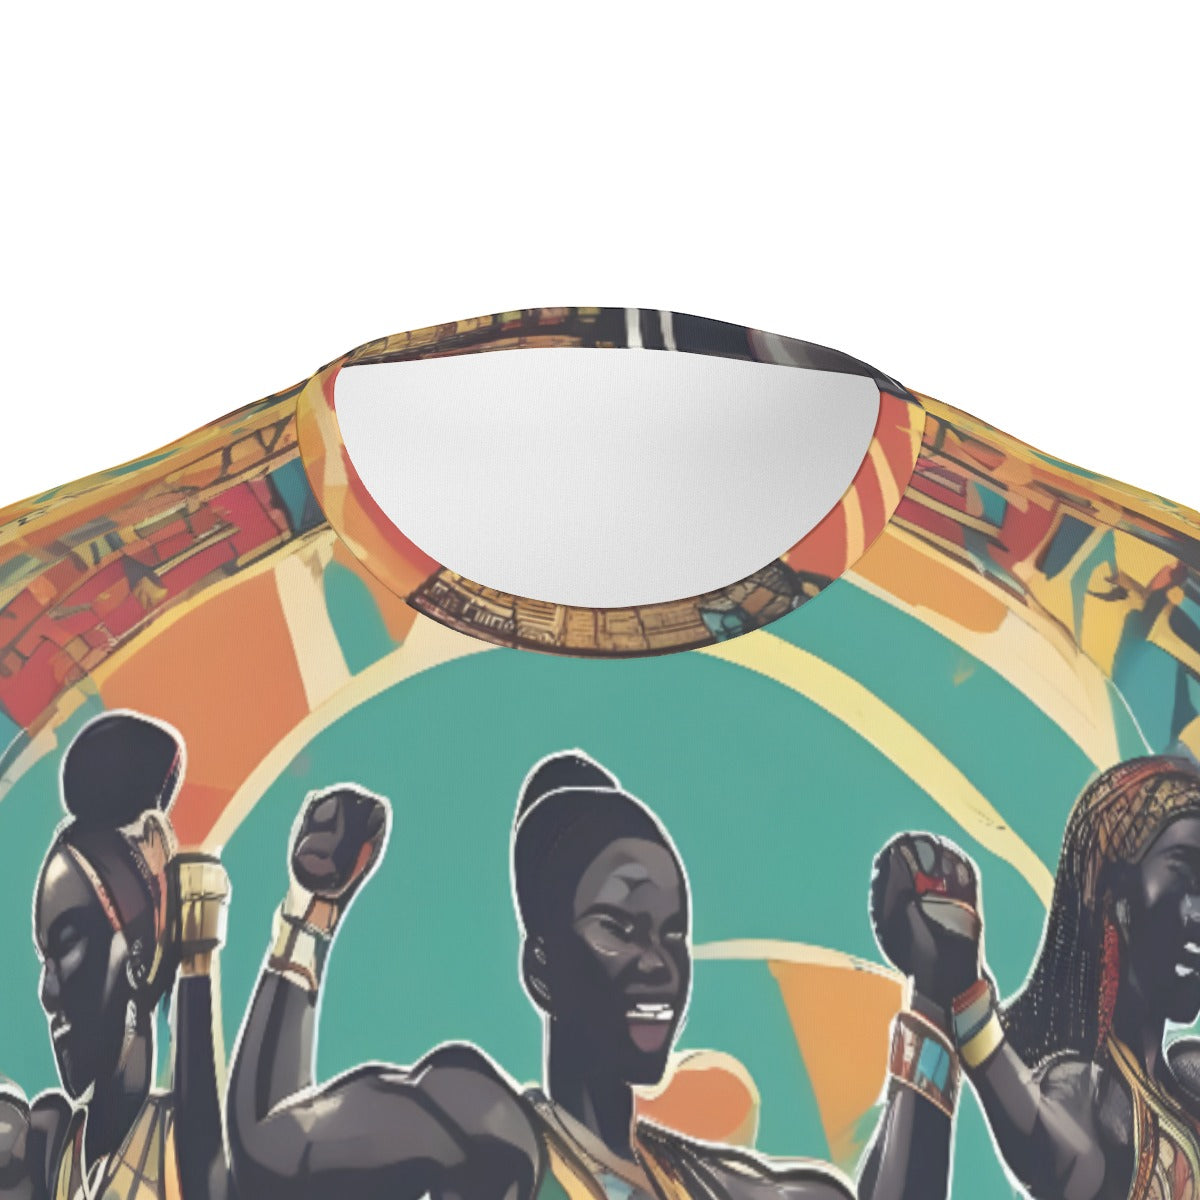 Africa Top Team Warrior Culture Warrior Queens T-Shirt